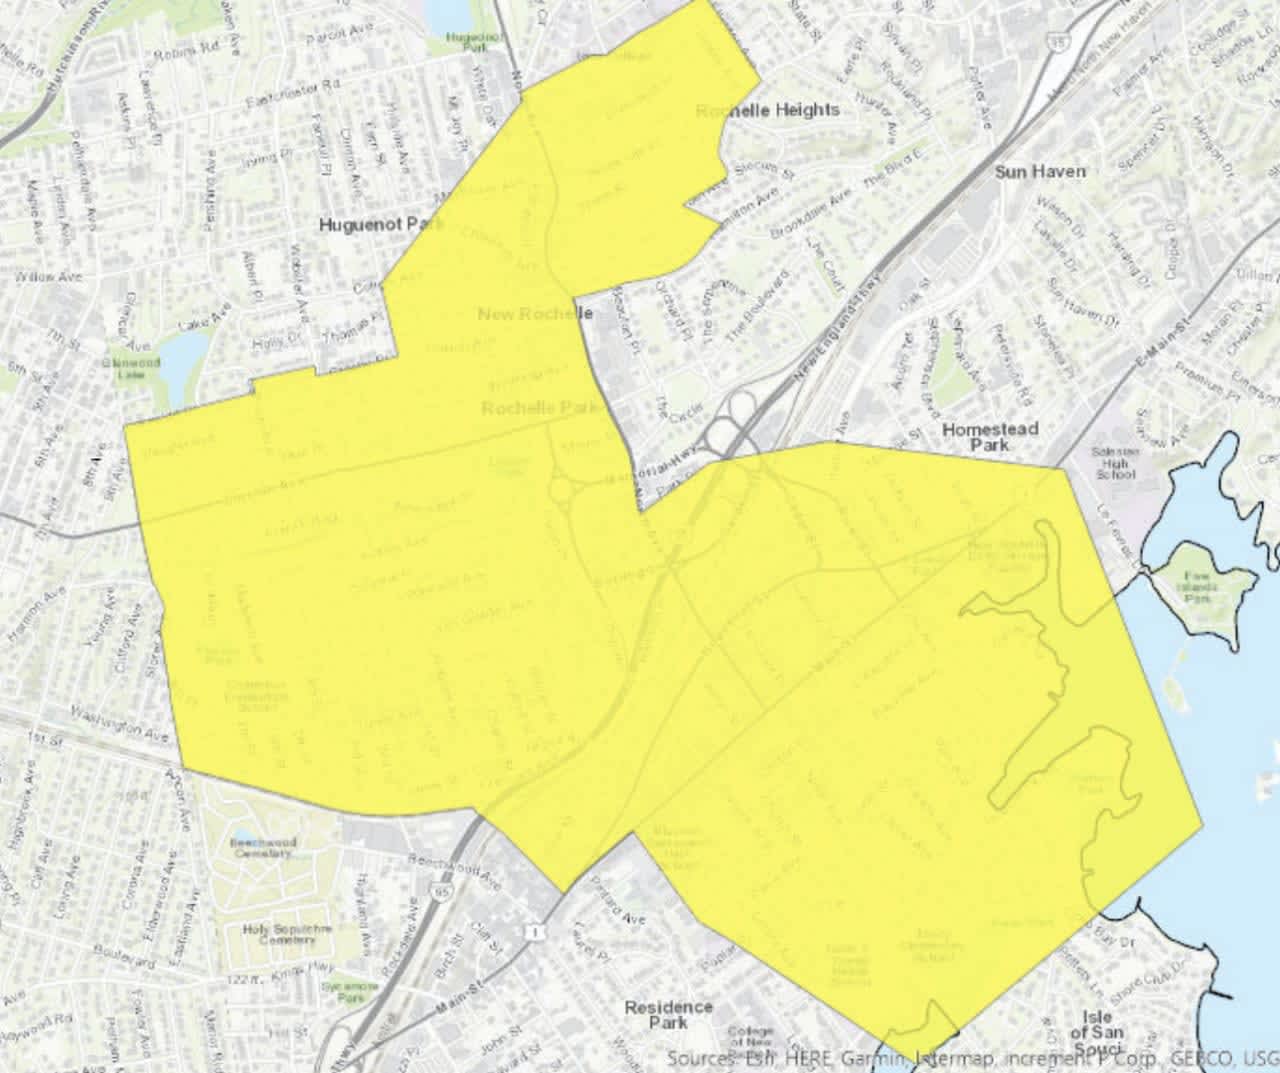 The New Rochelle "yellow zone."